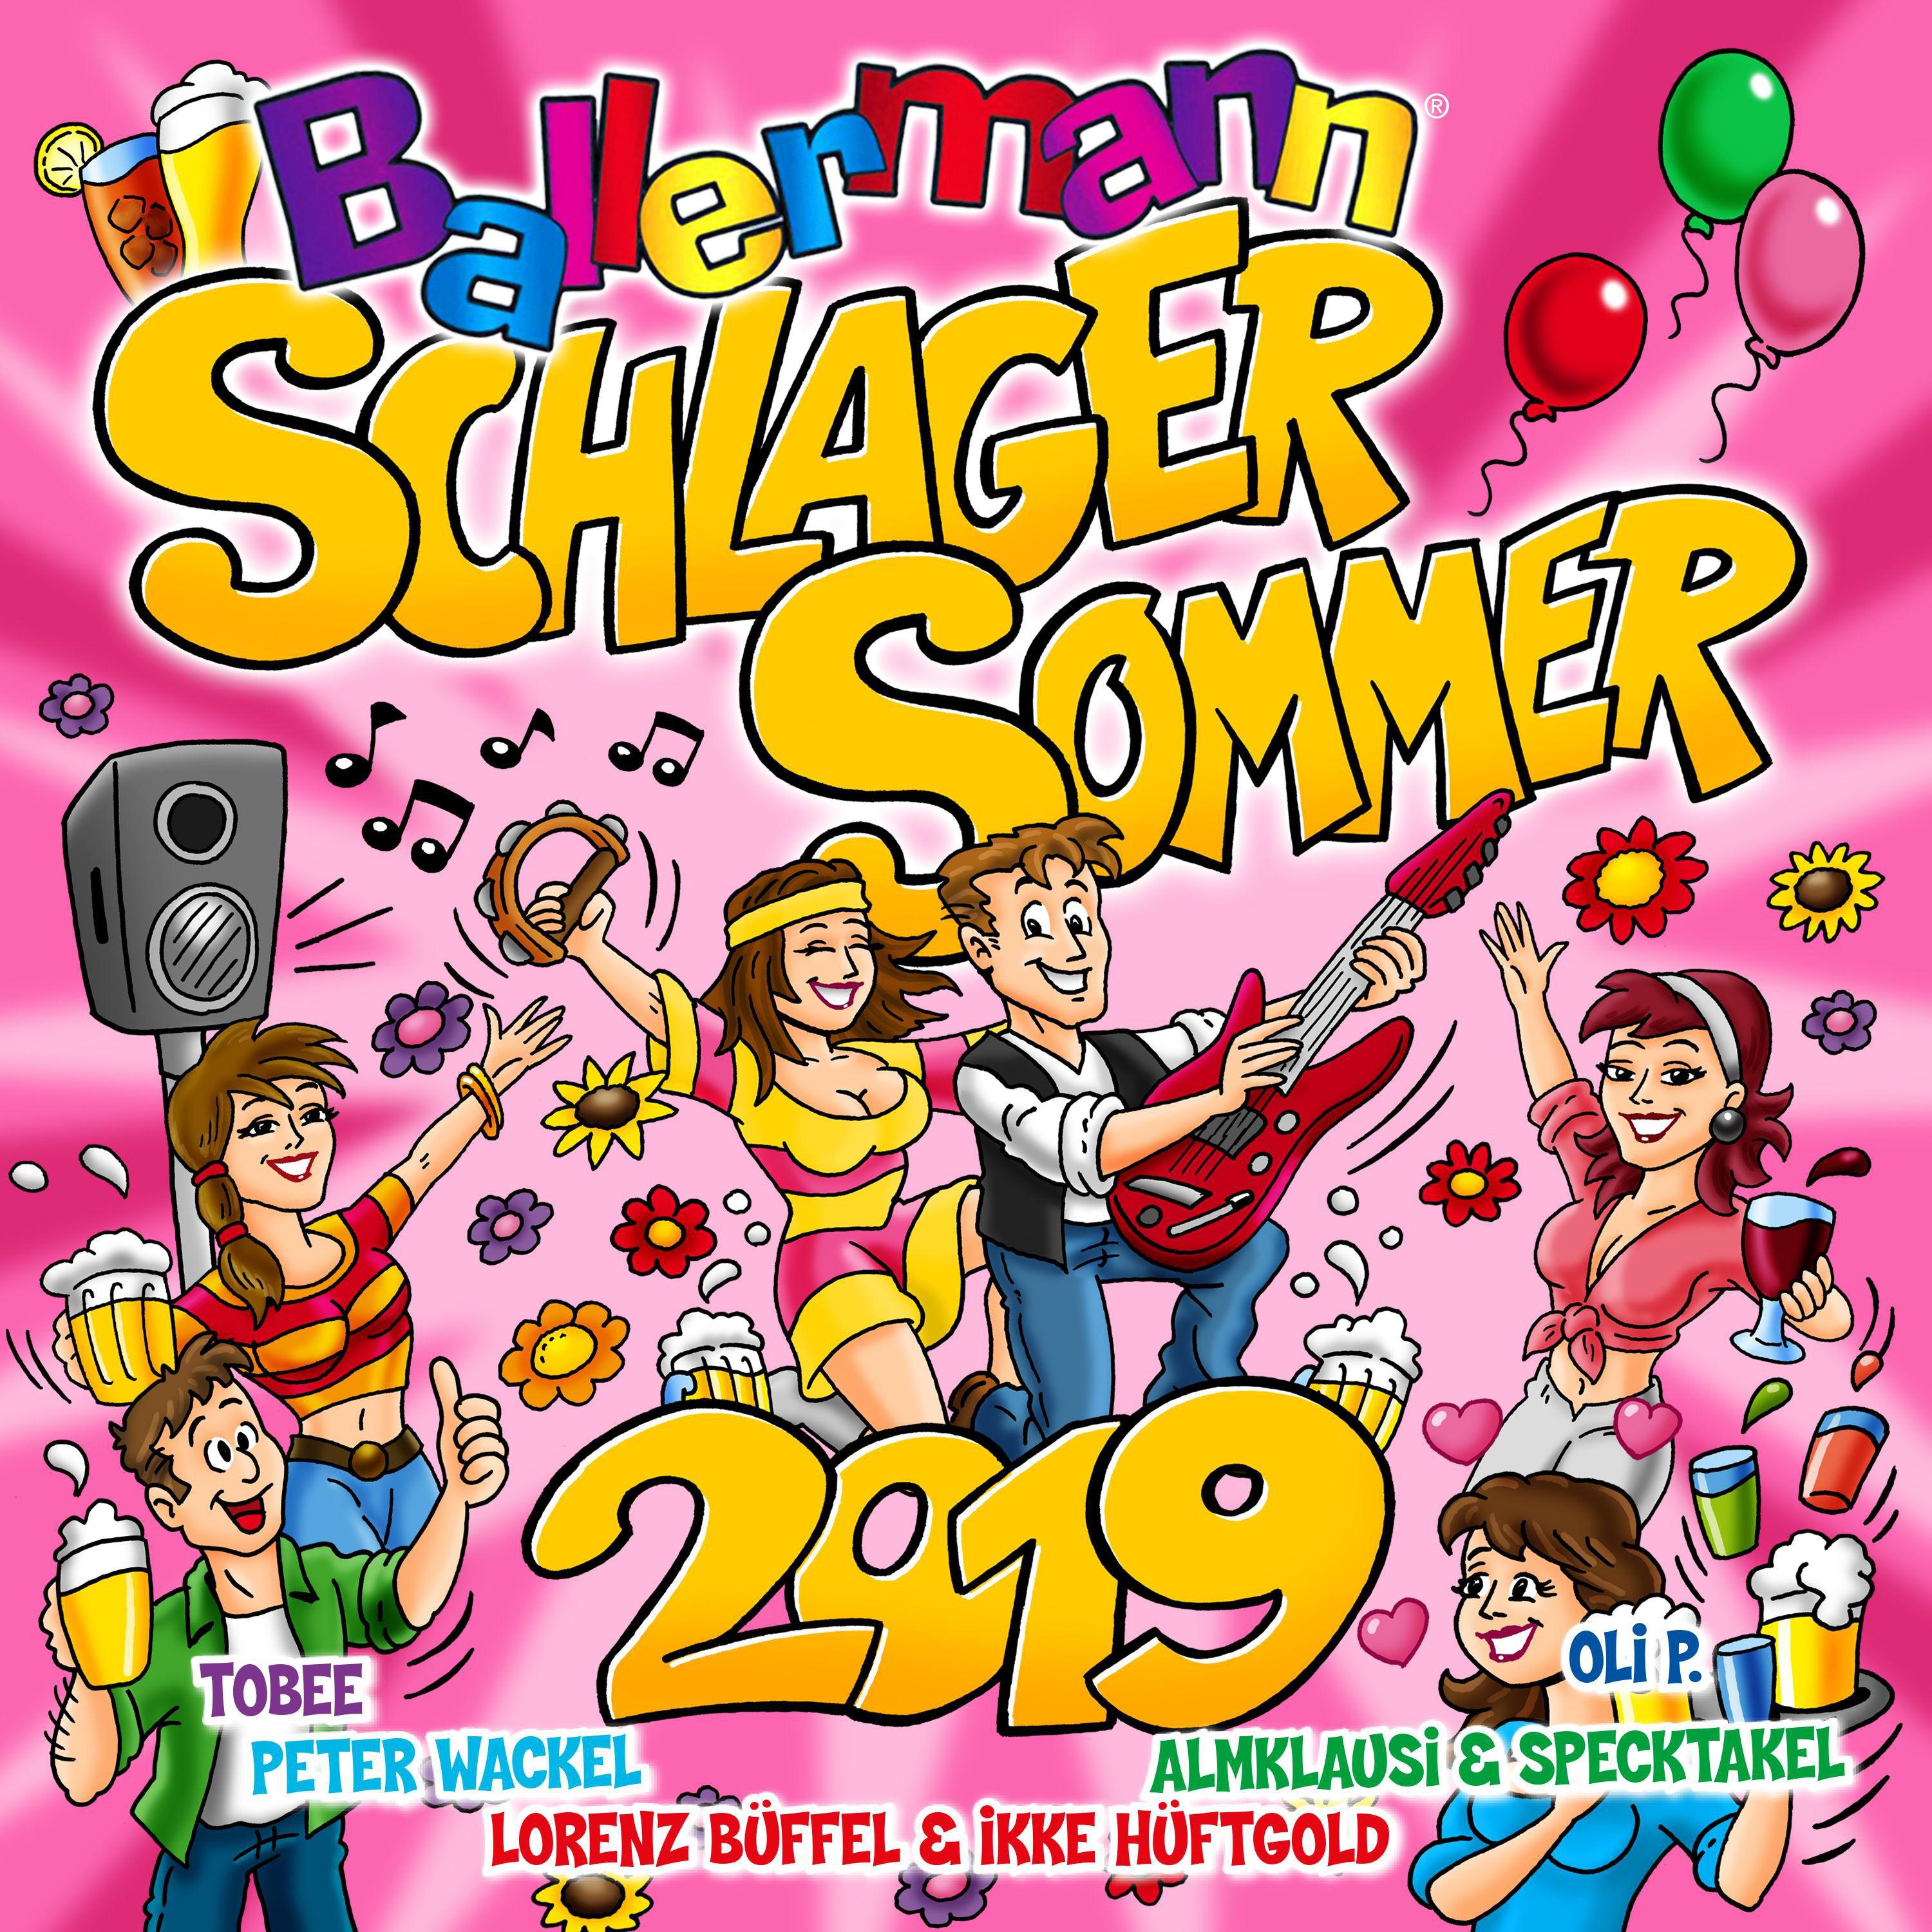 Ballermann Schlager Sommer 2019